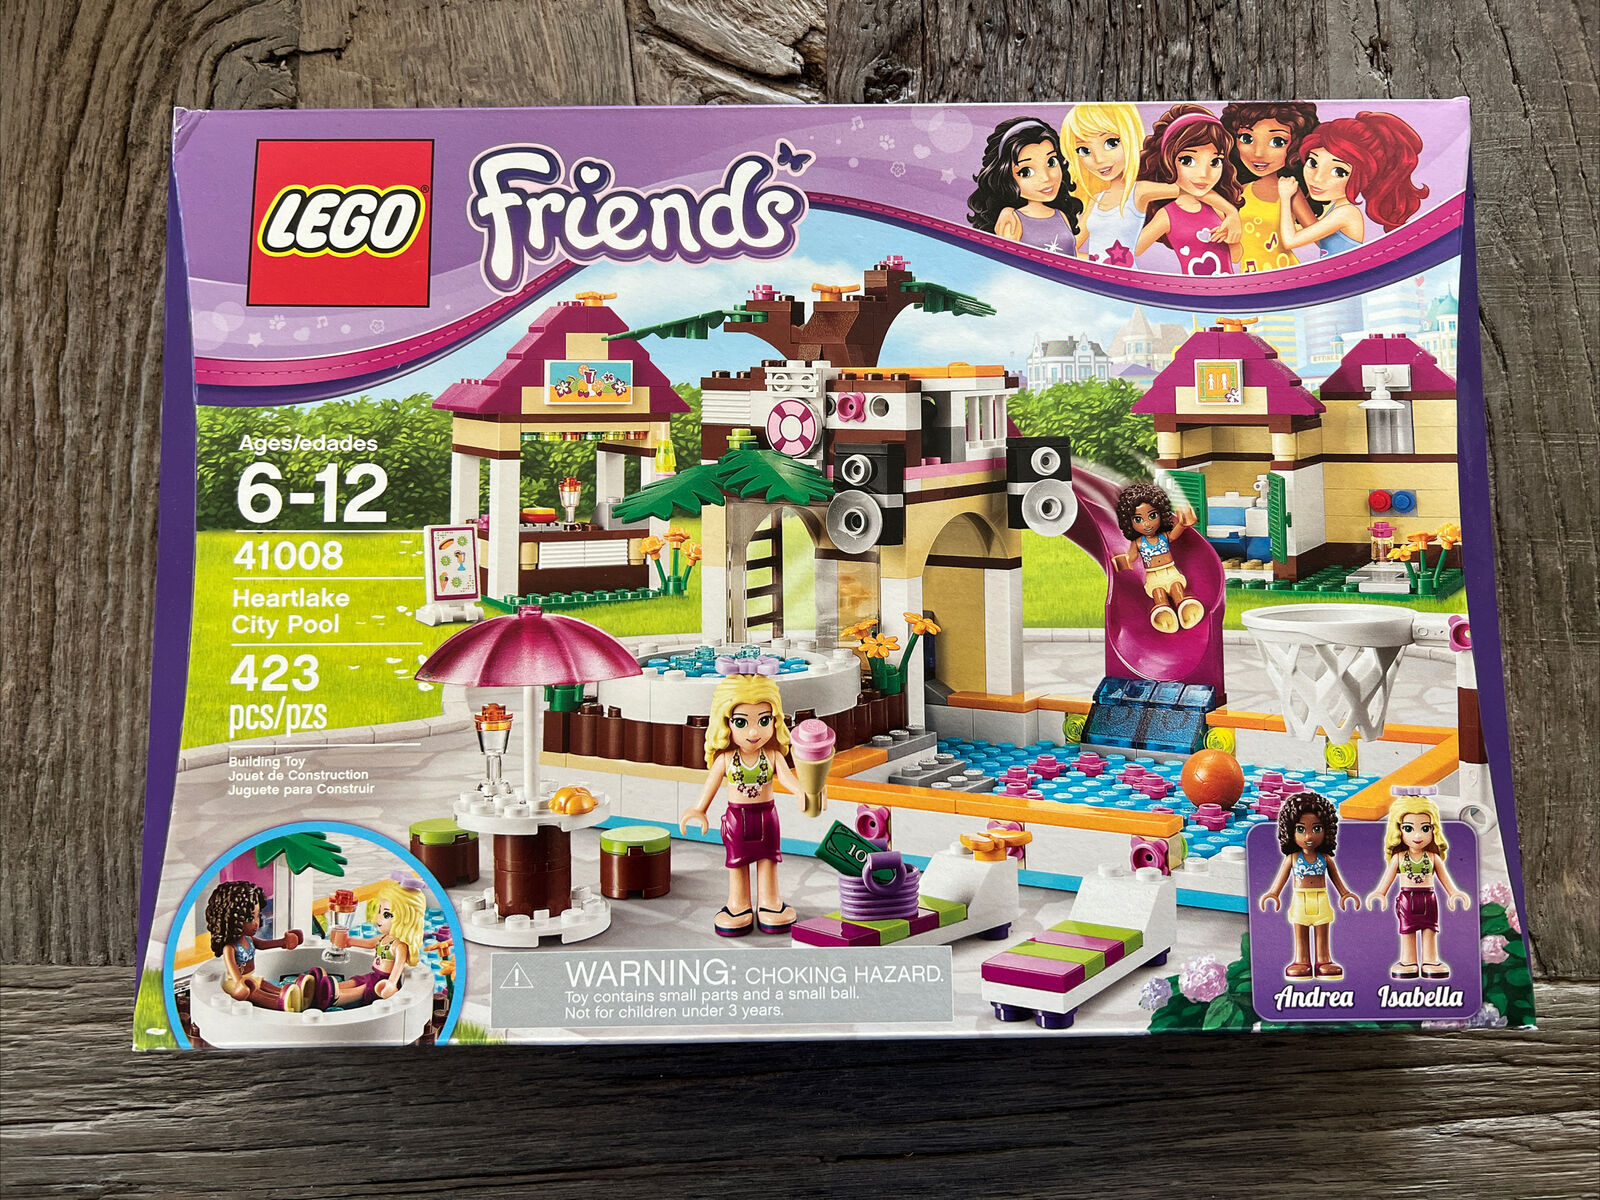 New LEGO Friends 41008 Heartlake City Pool SET 423 pcs age 6-12 SEALED Retired